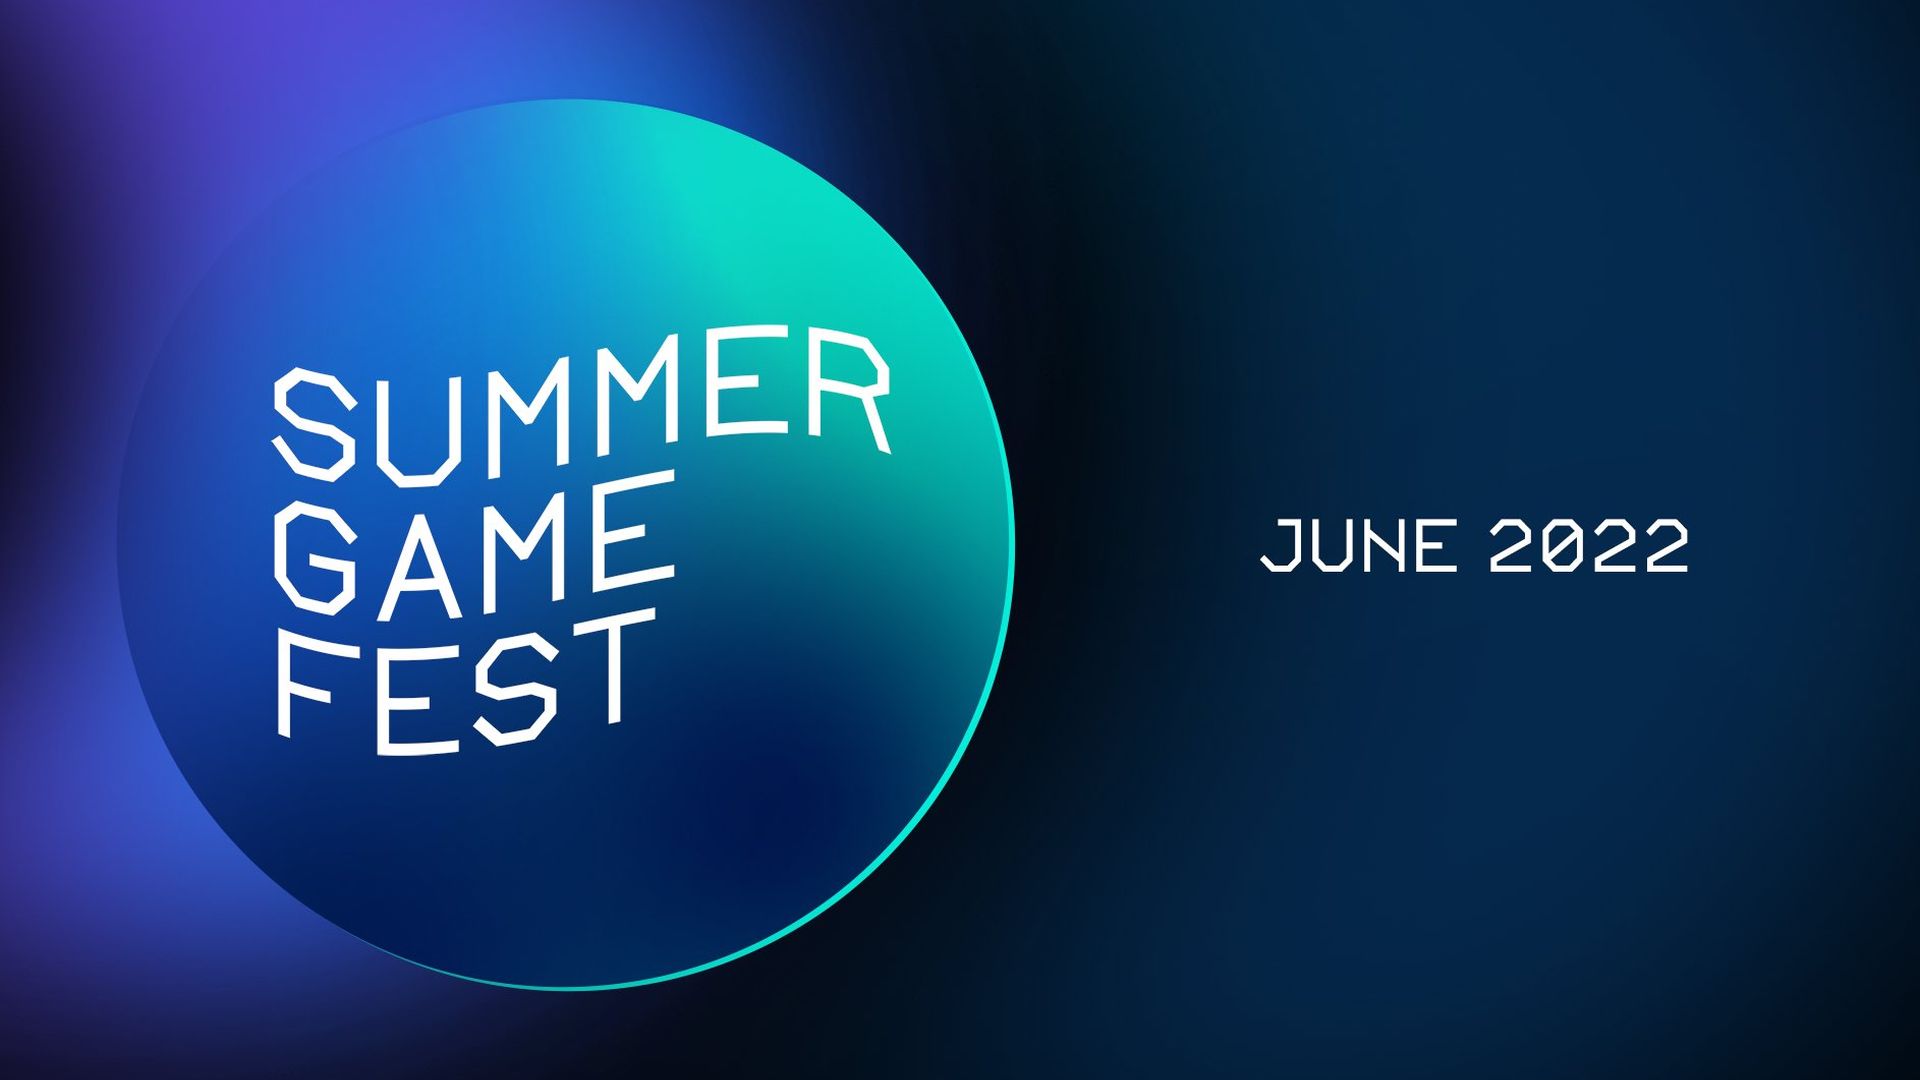 Summer Game Fest Showcase Had Over 3.5 Million Peak Concurrent Viewers